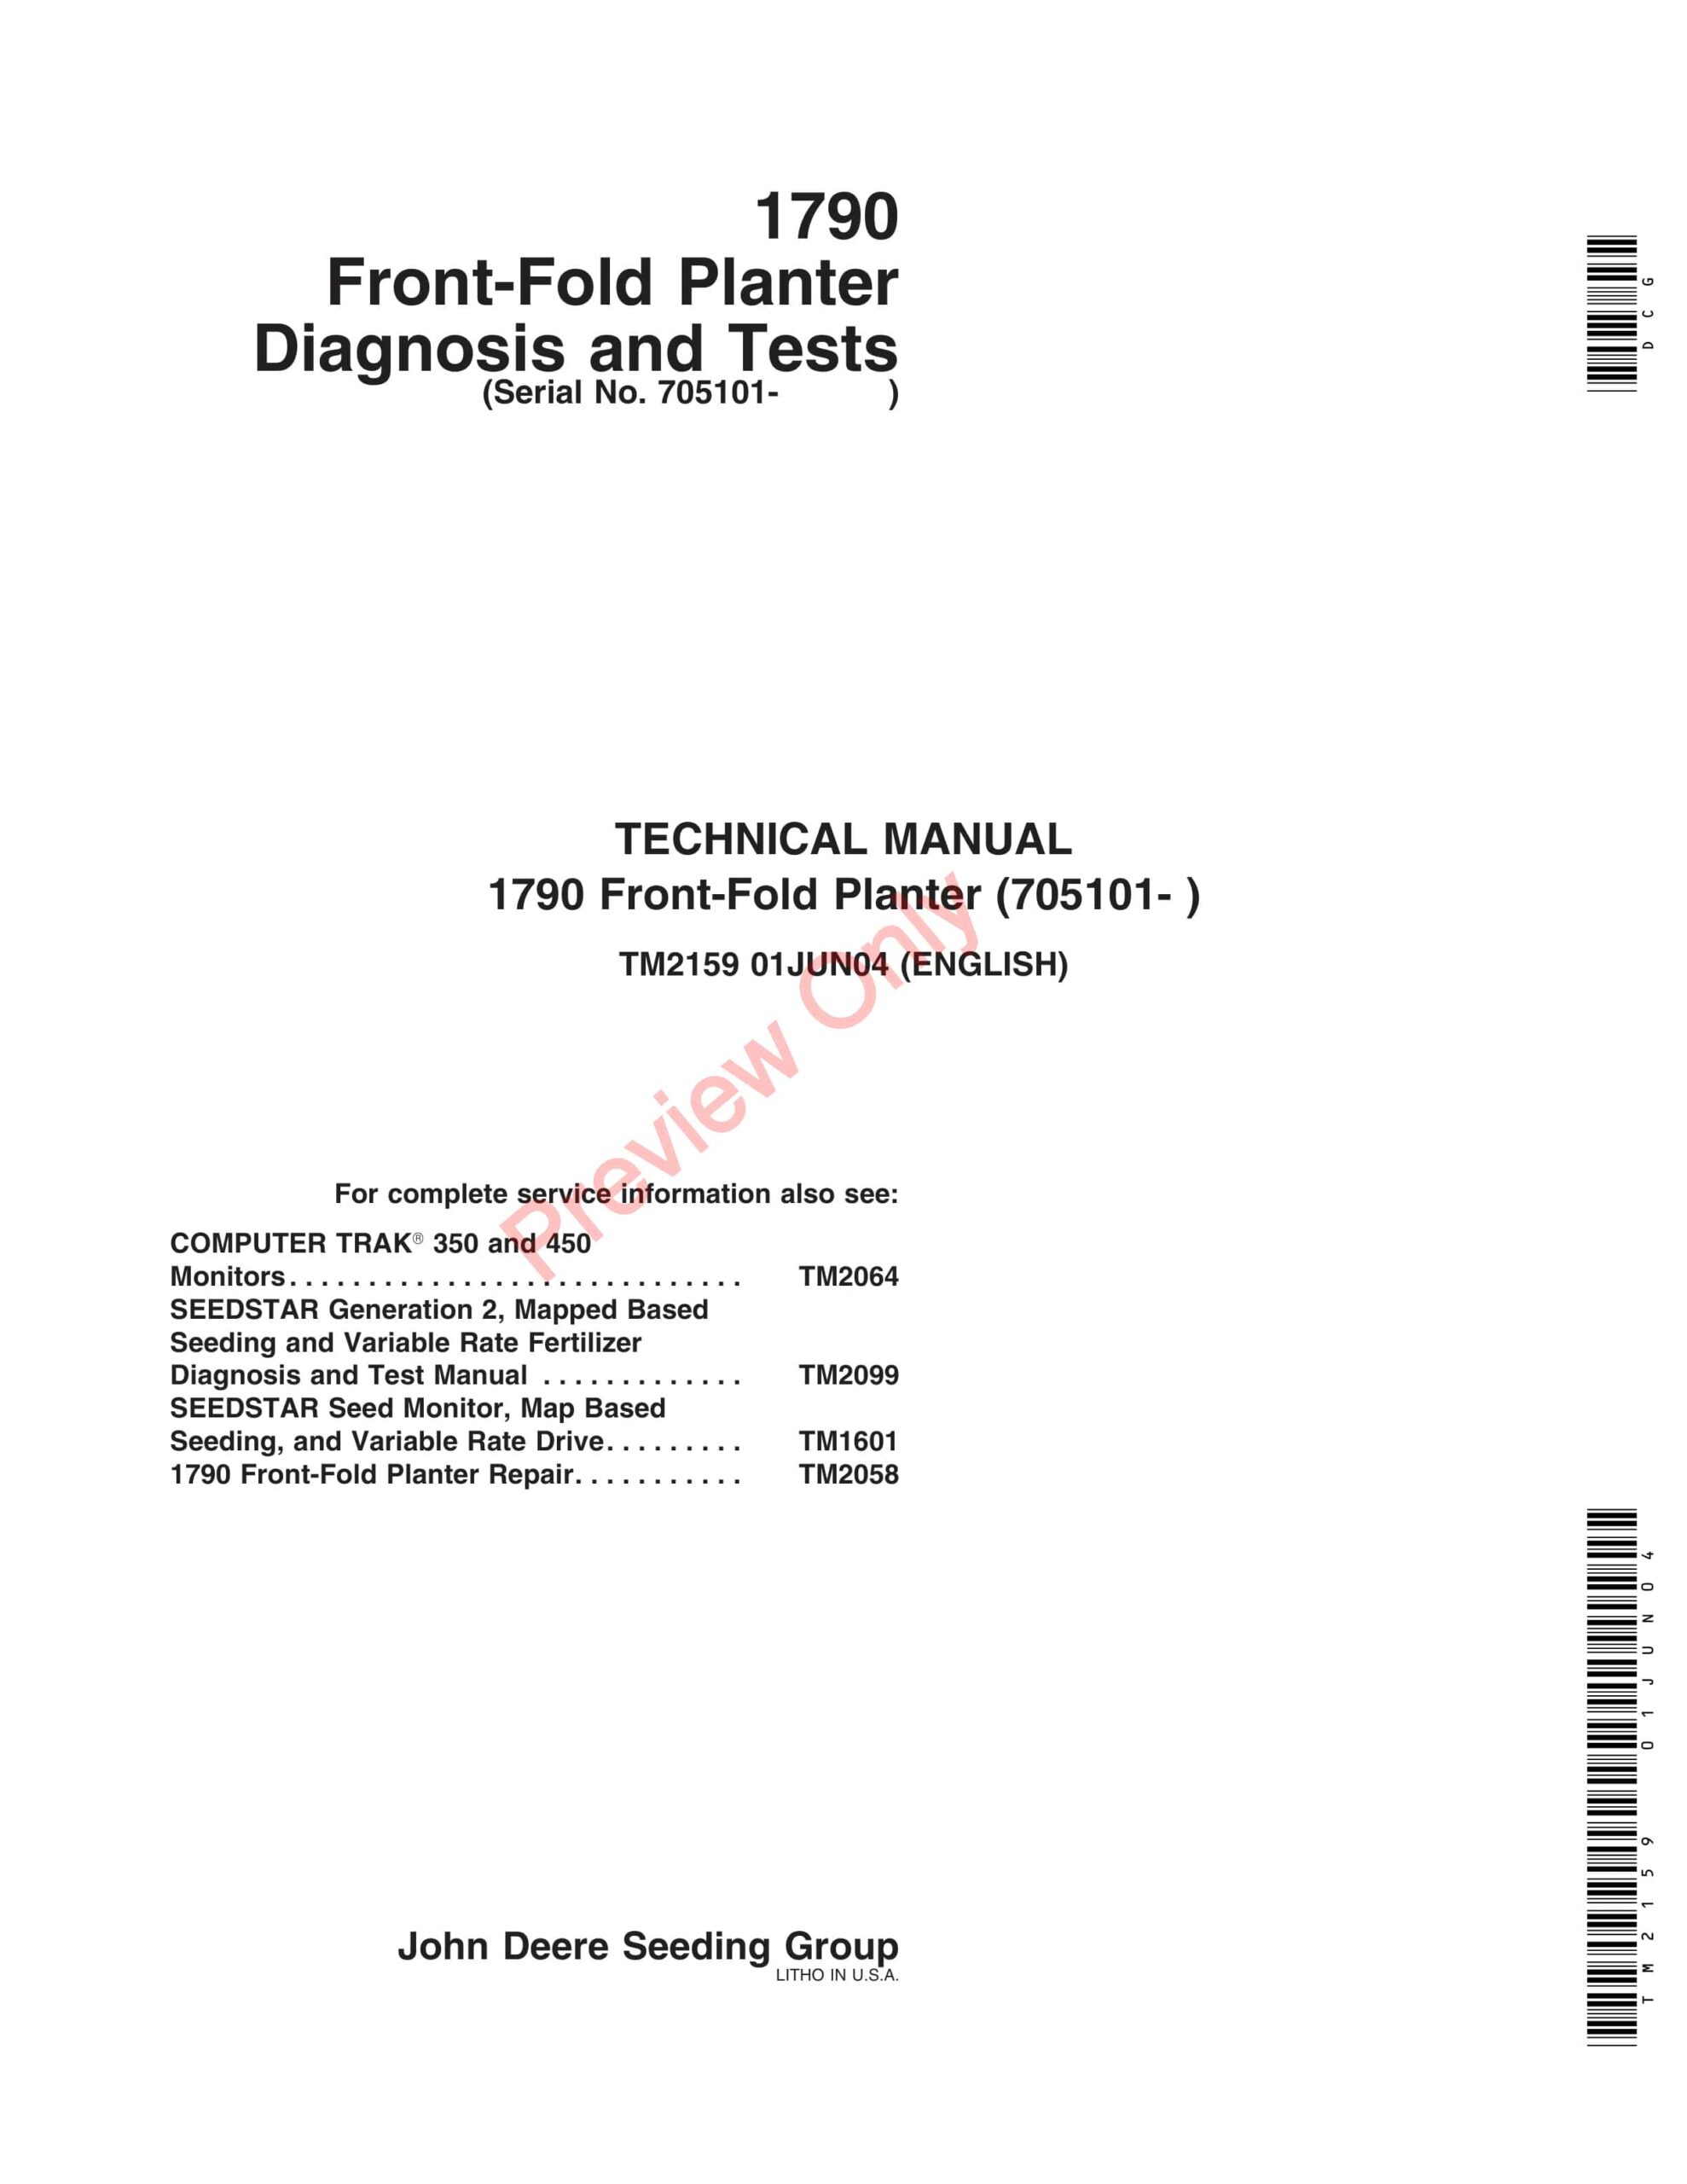 John Deere 1790 Front Fold Planter Technical Manual TM2159 01JUN04-1